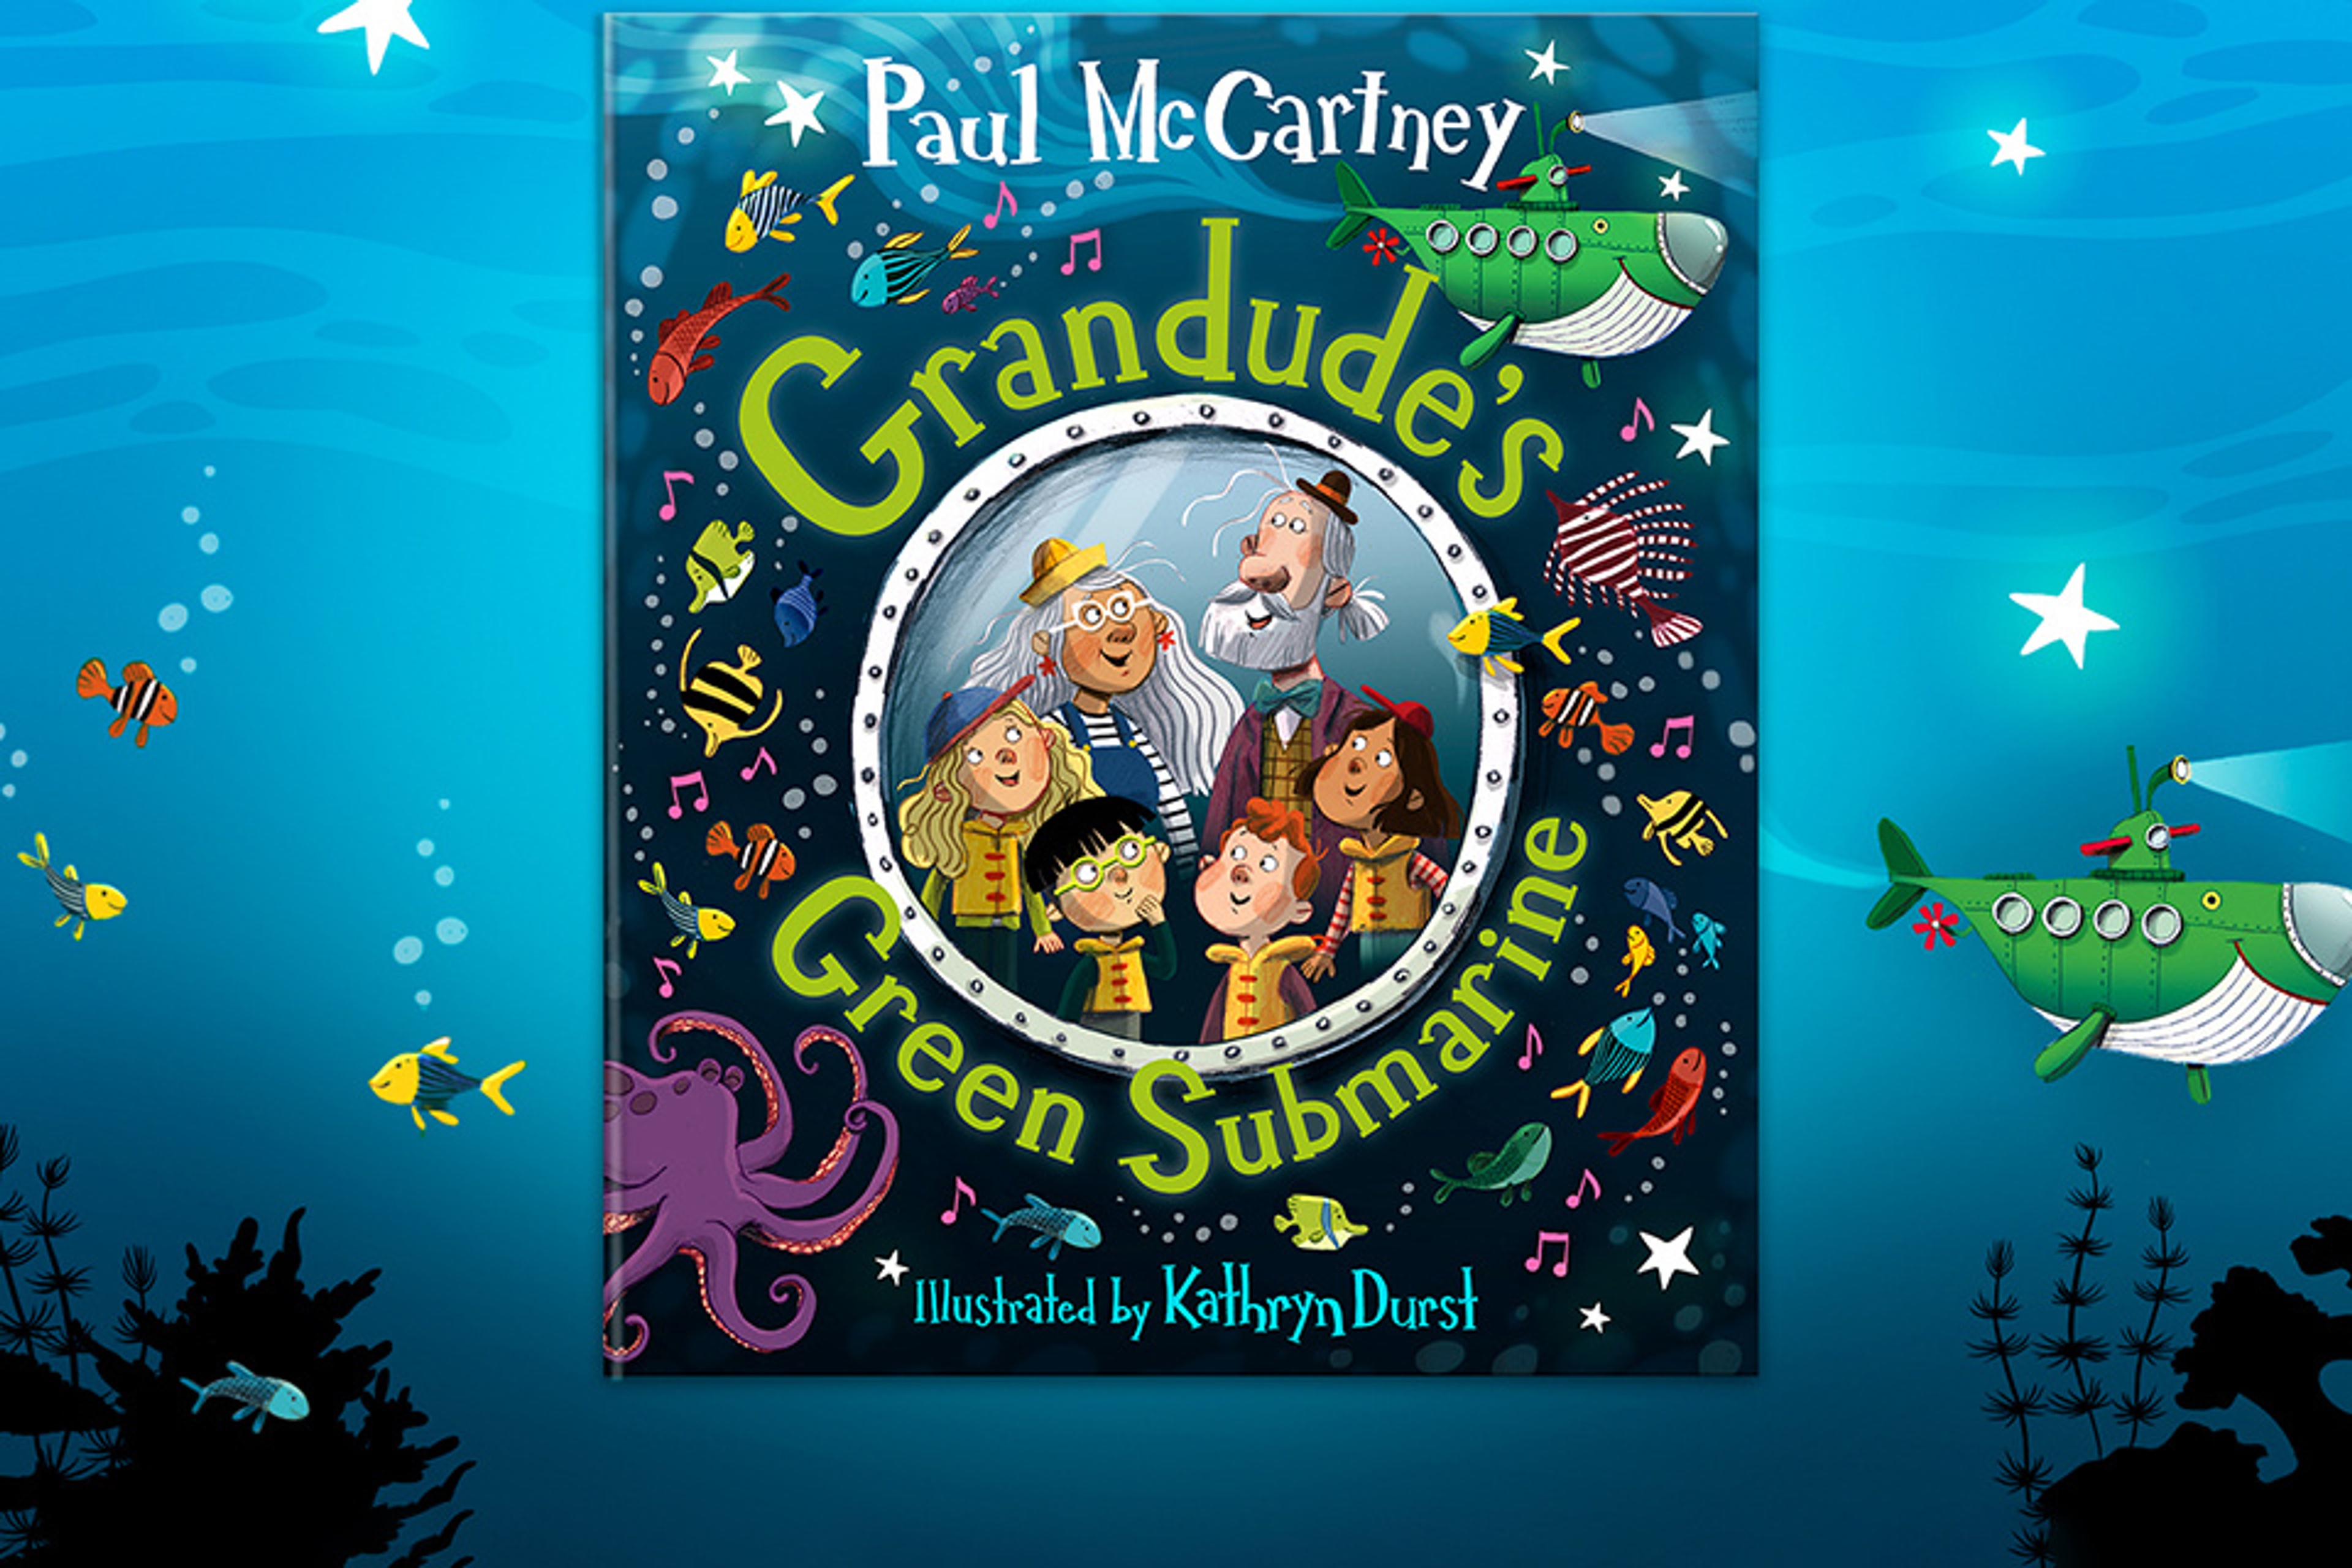 'Grandude’s Green Submarine' book cover; the sequel of Paul's children's picture book 'Hey Grandude!'